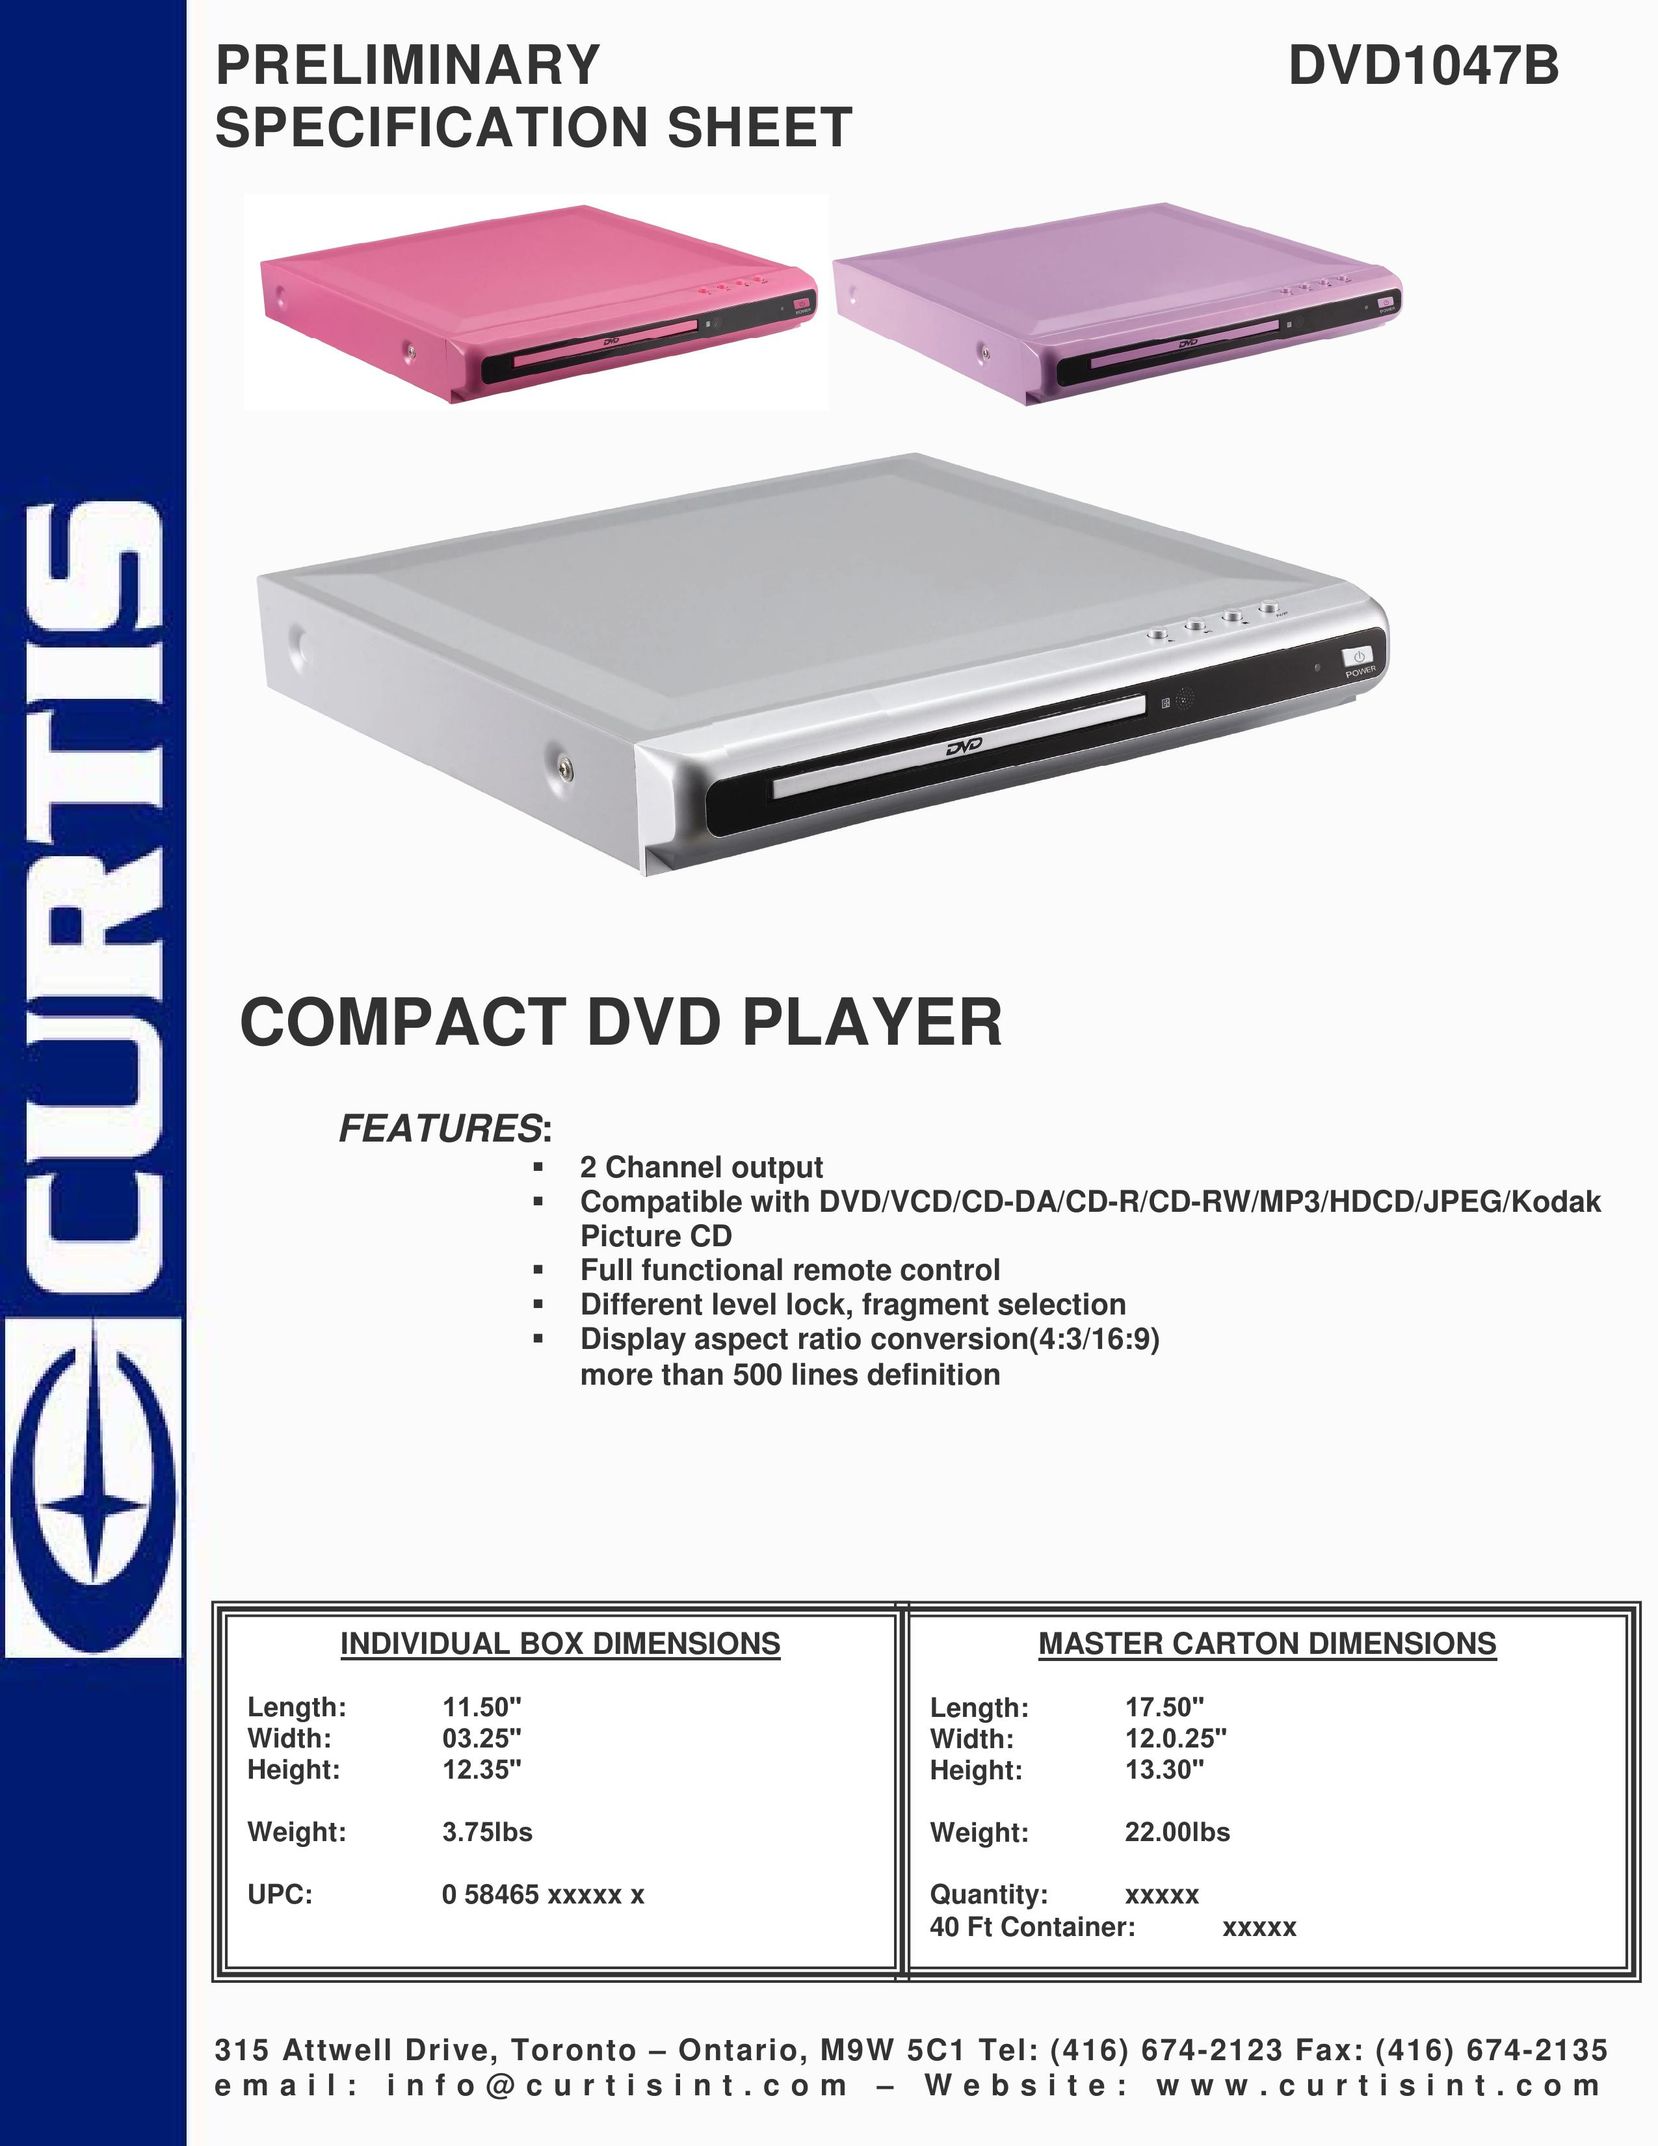 Curtis DVD1047B Portable DVD Player User Manual